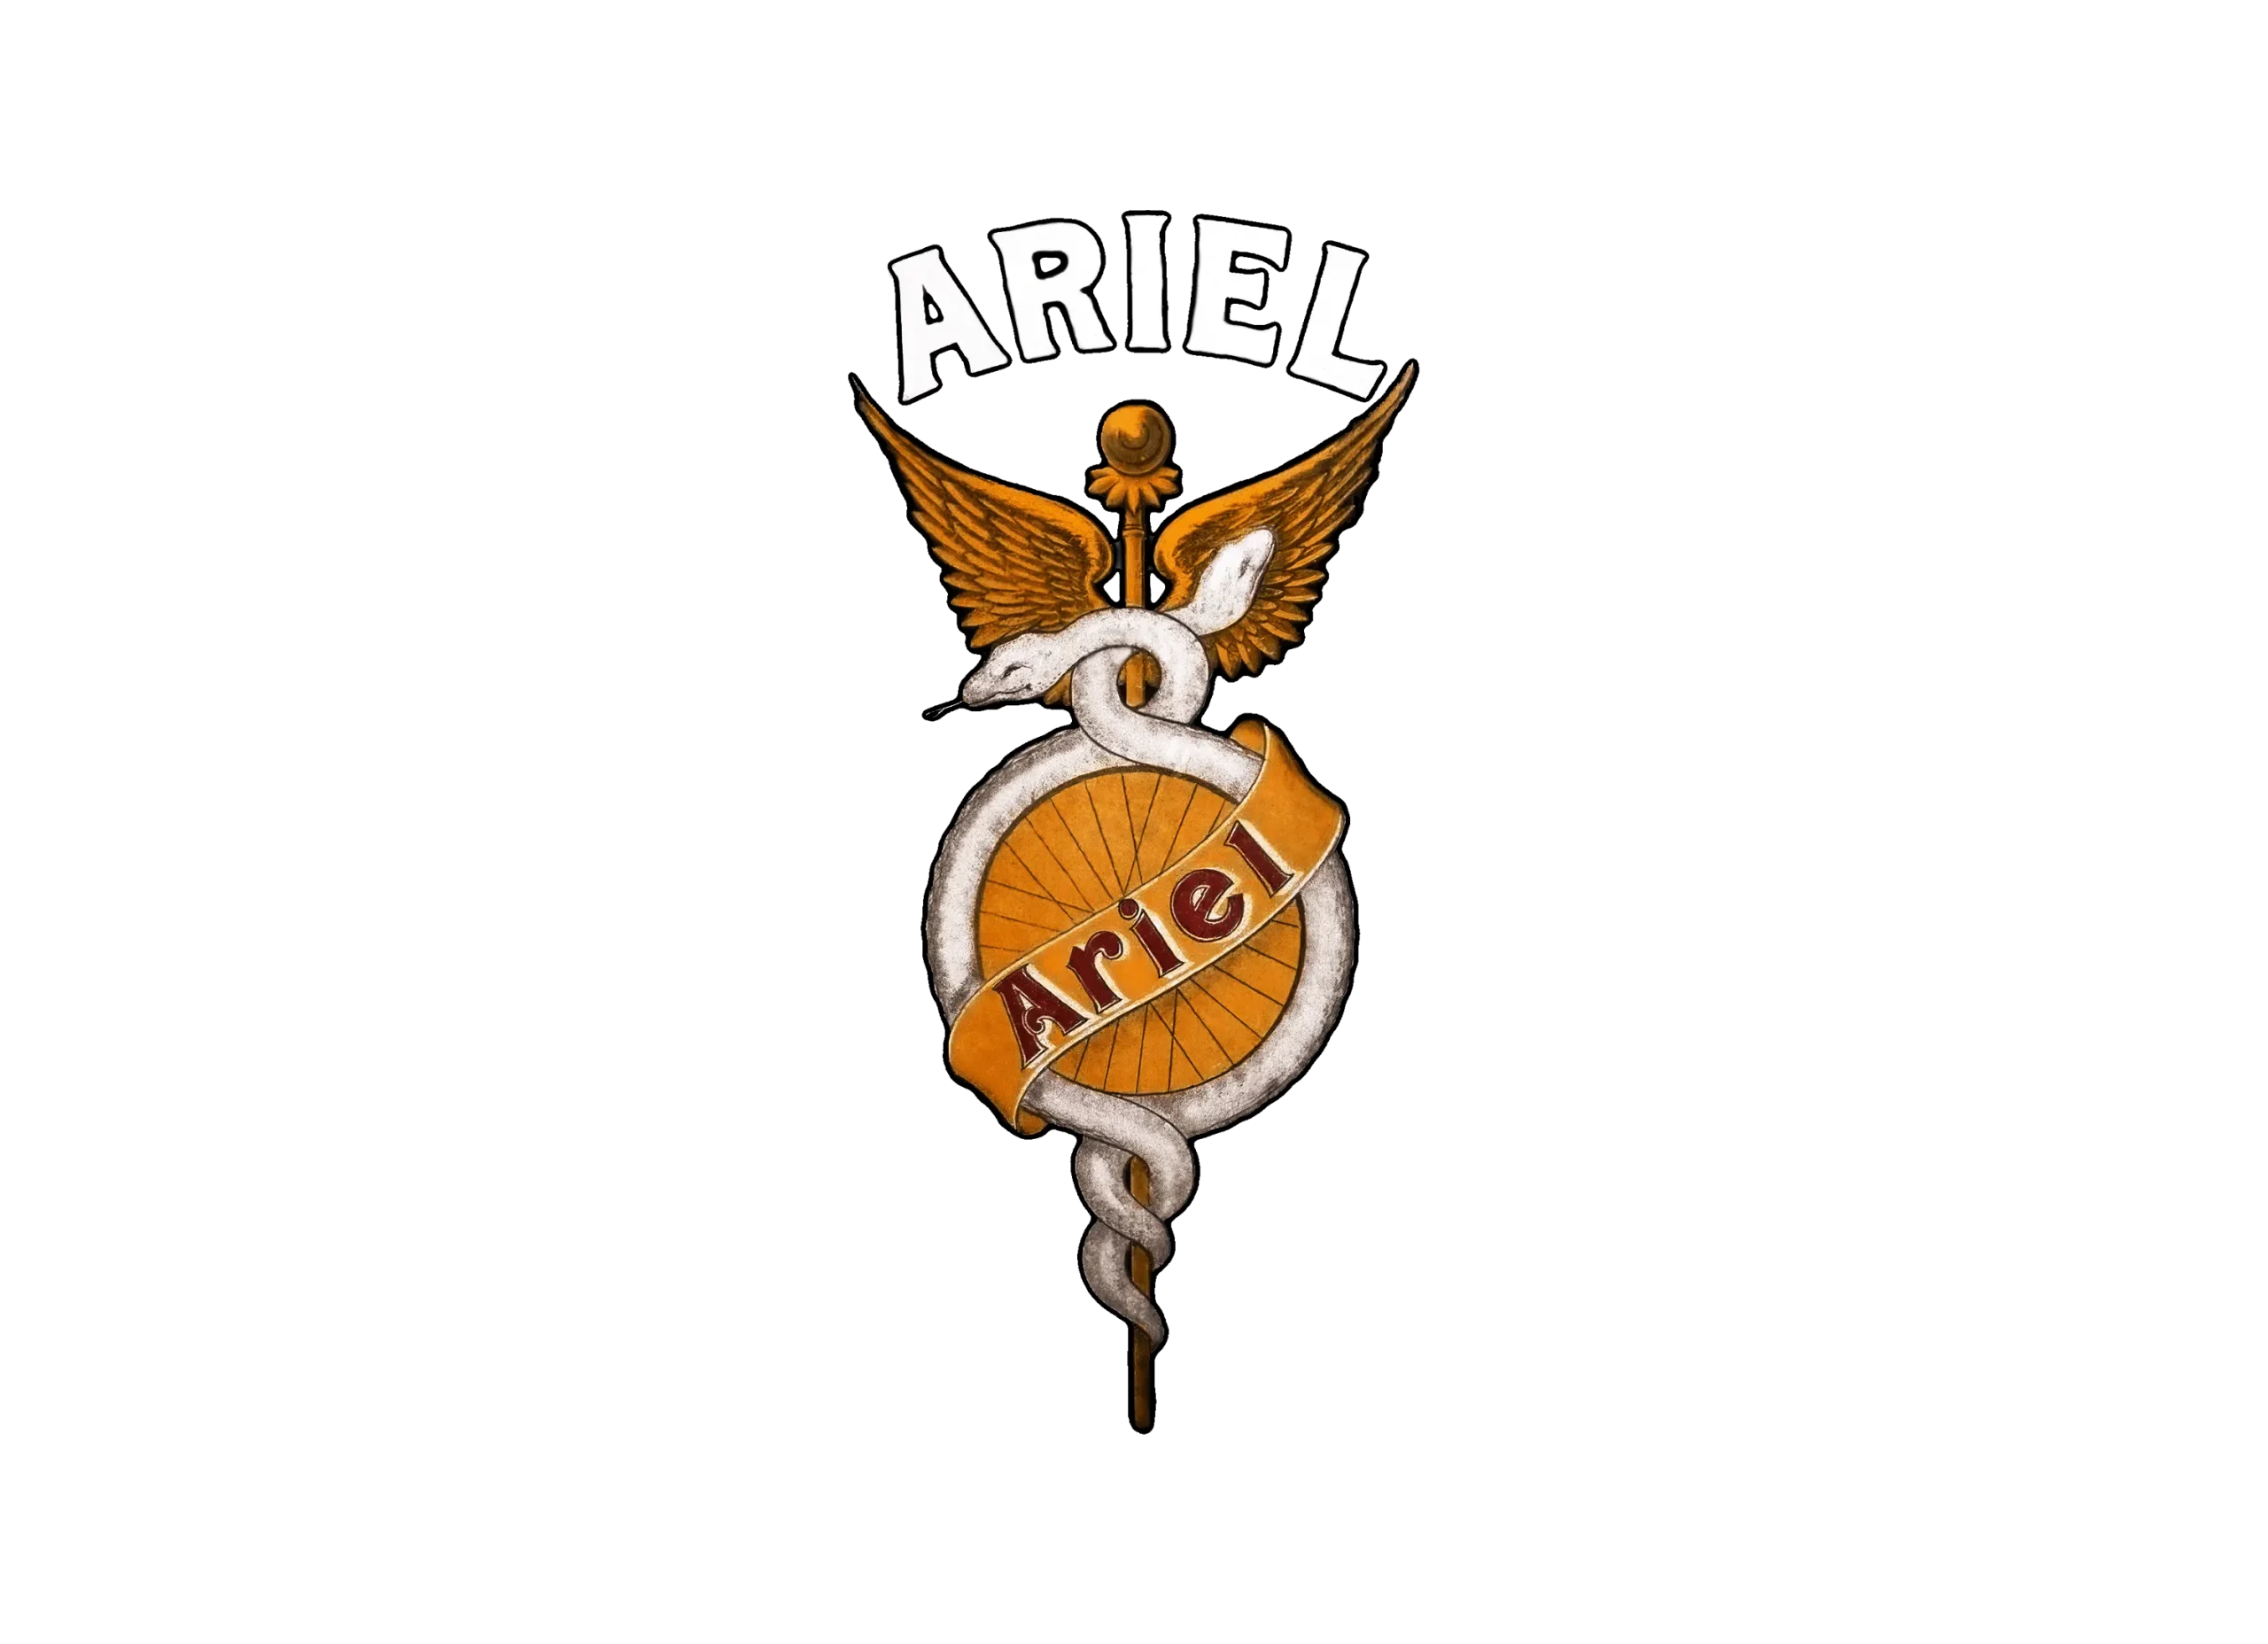 Ariel logo 1951-1970